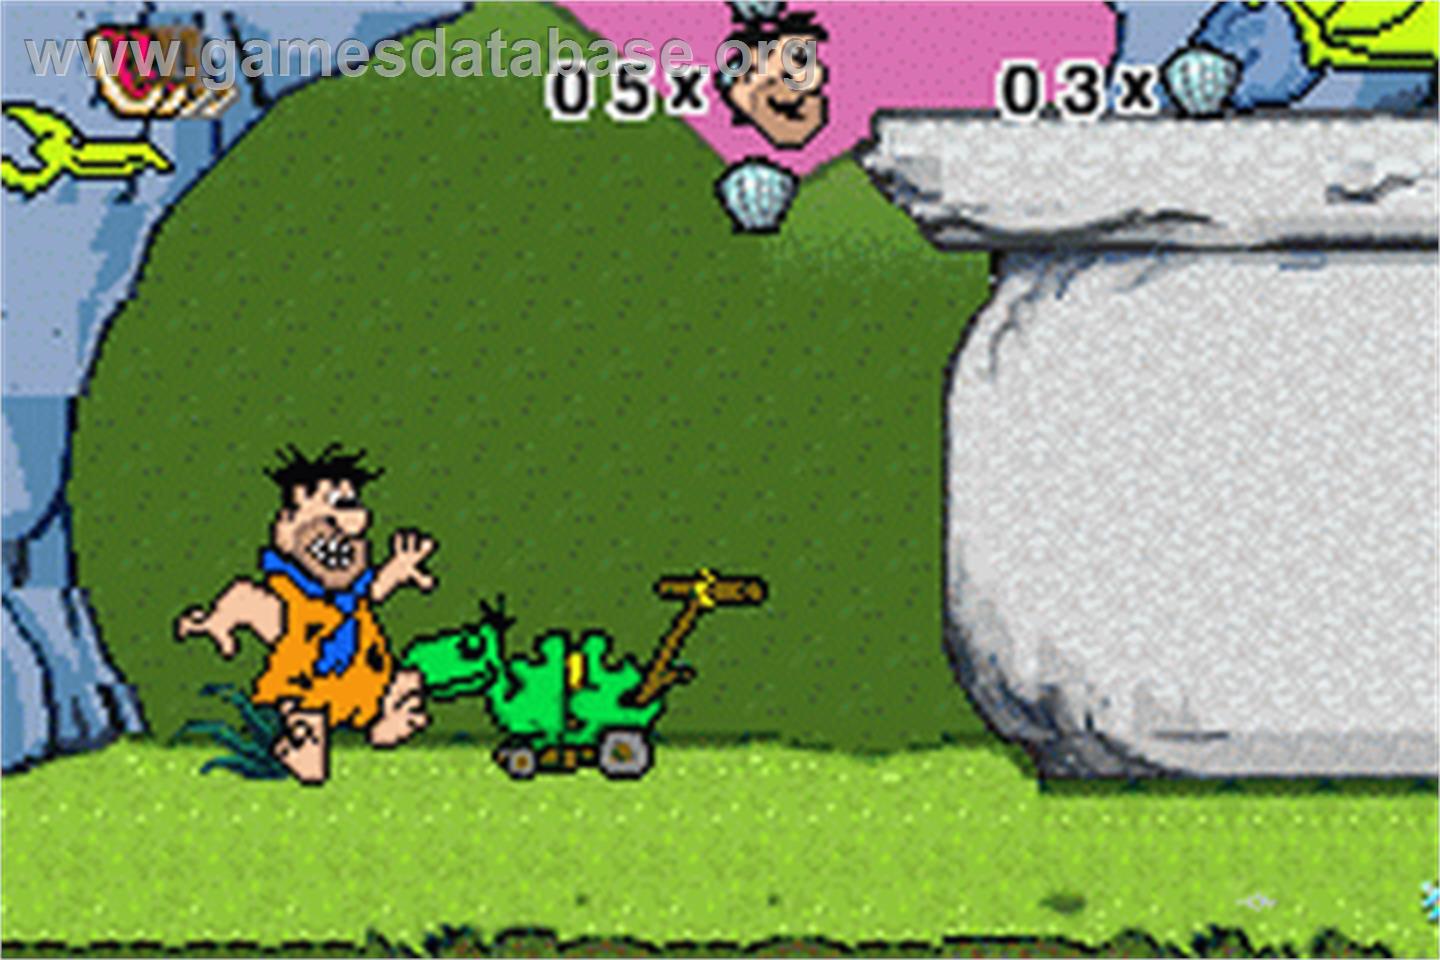 Flintstones: Big Trouble in Bedrock - Nintendo Game Boy Advance - Artwork - In Game